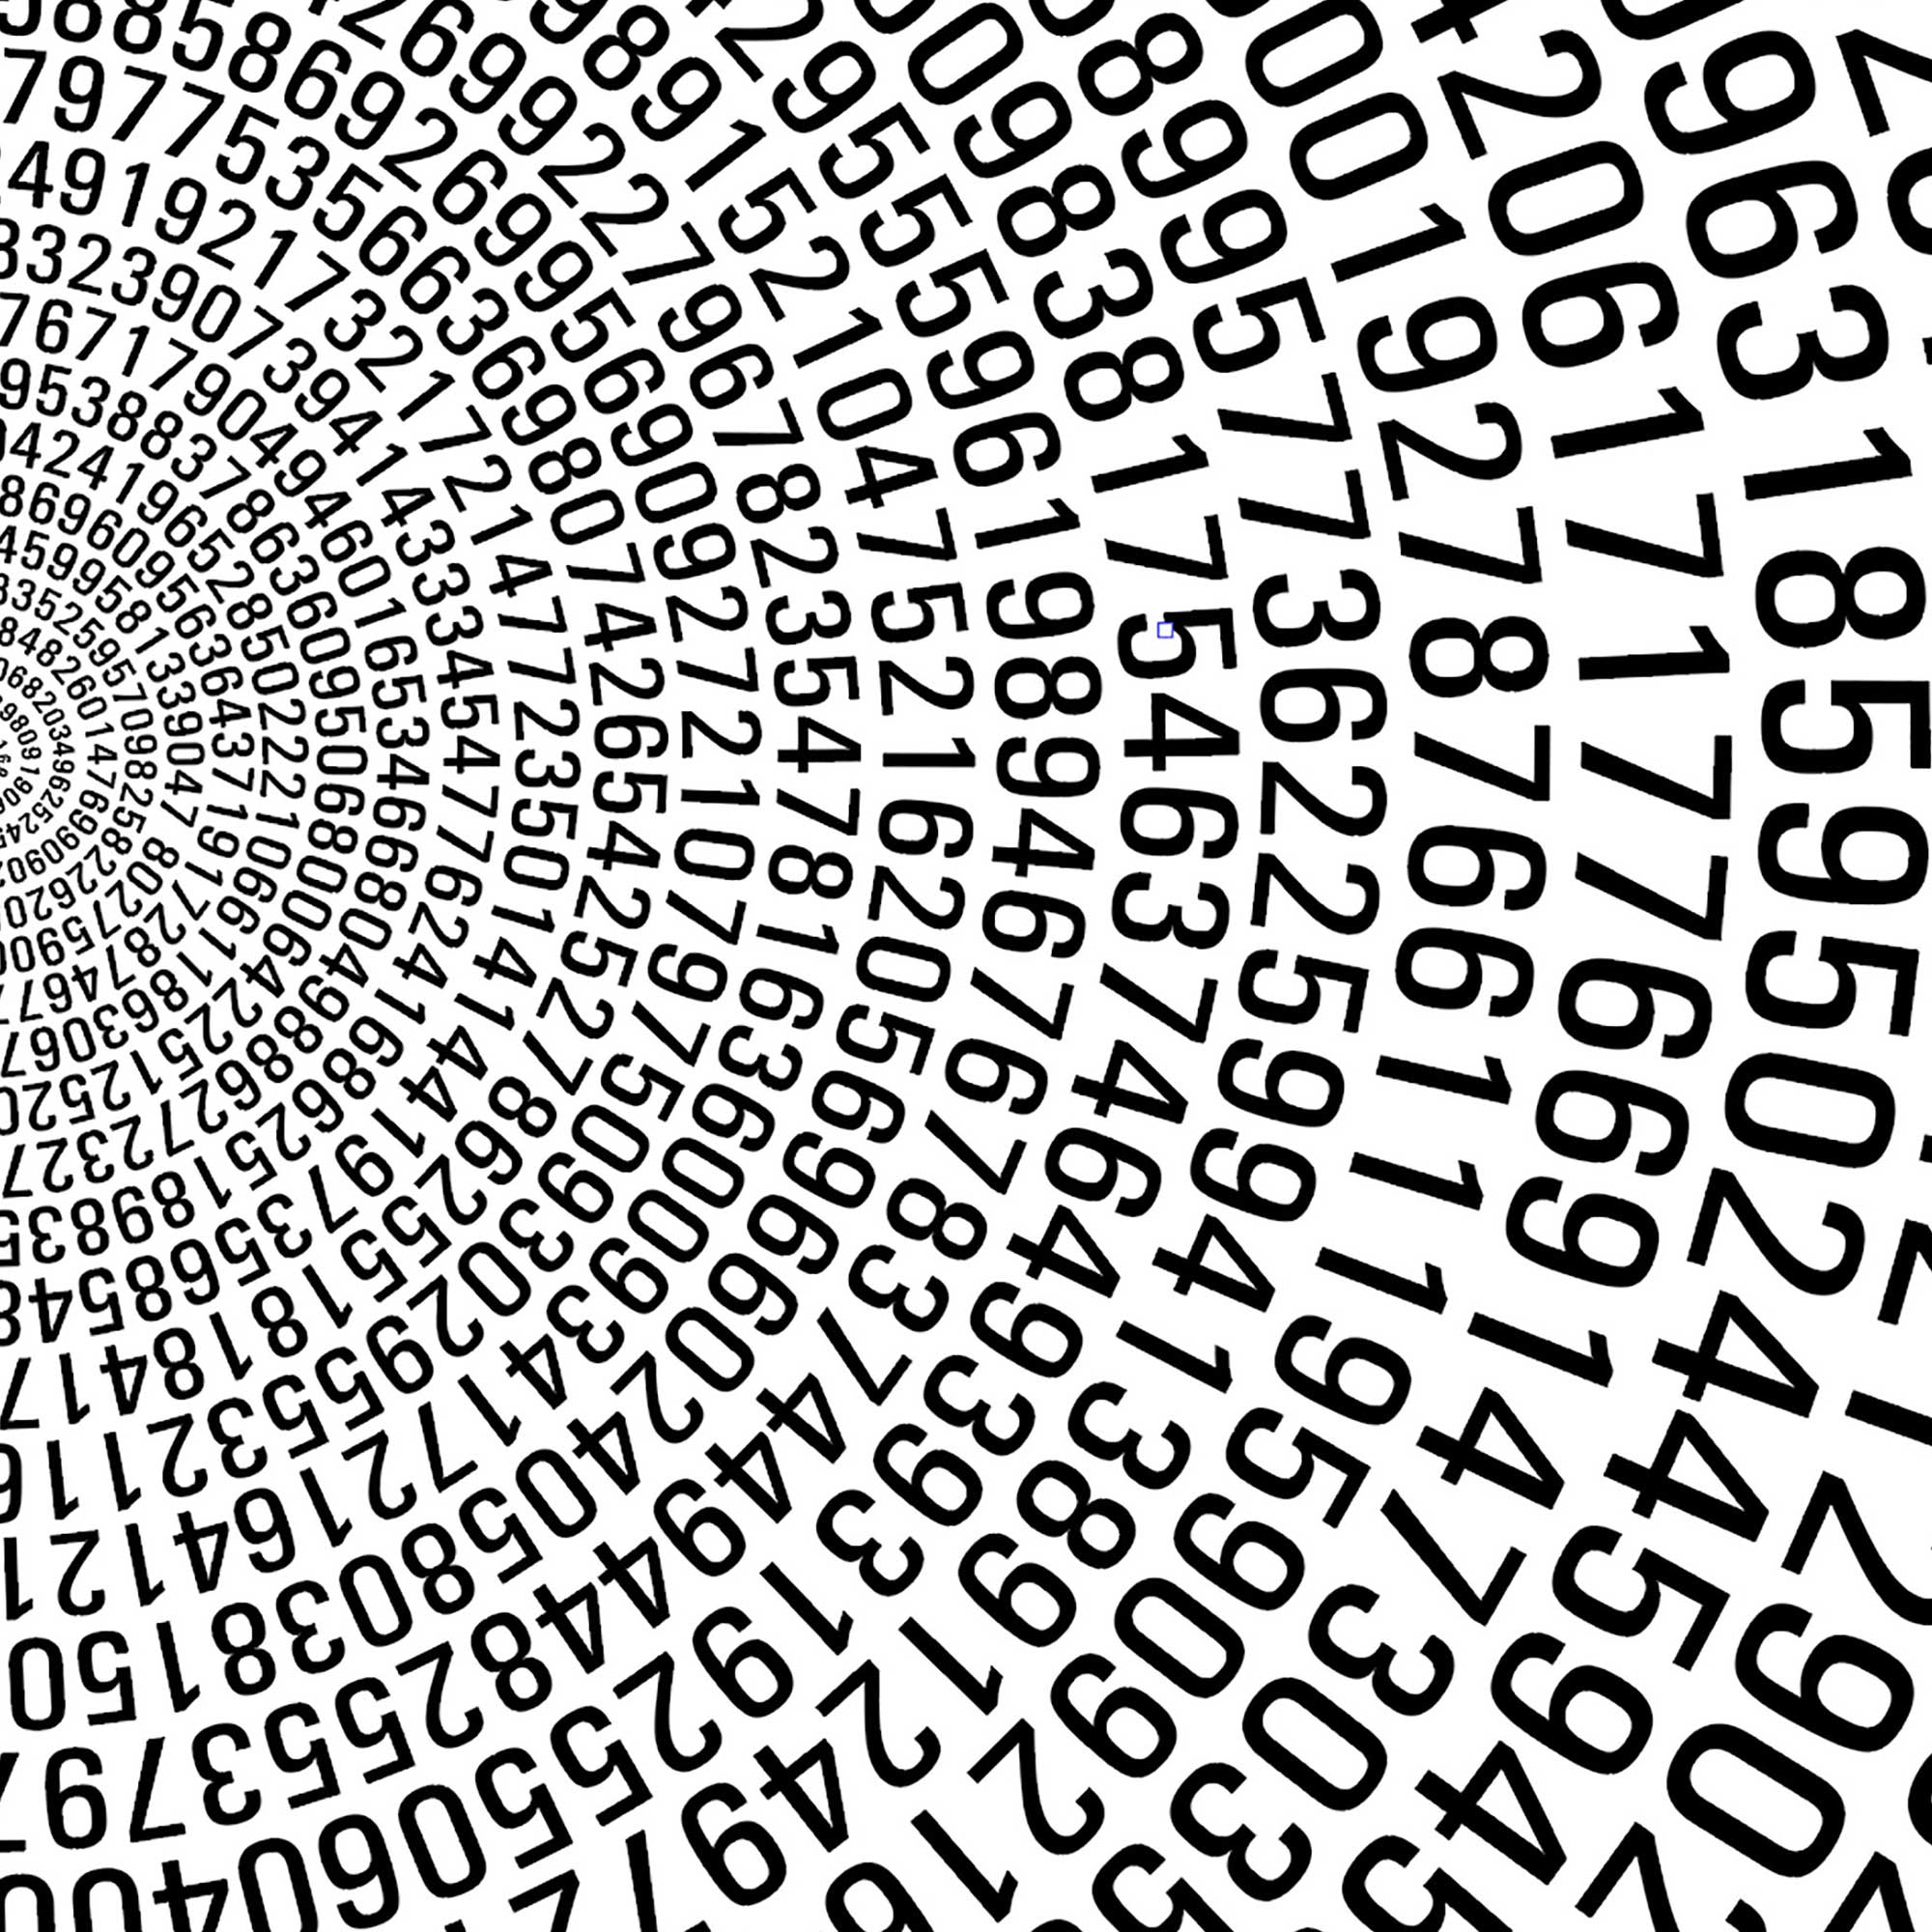 1090 decimal places of Pi art print Numbers of Pi Mathematics print